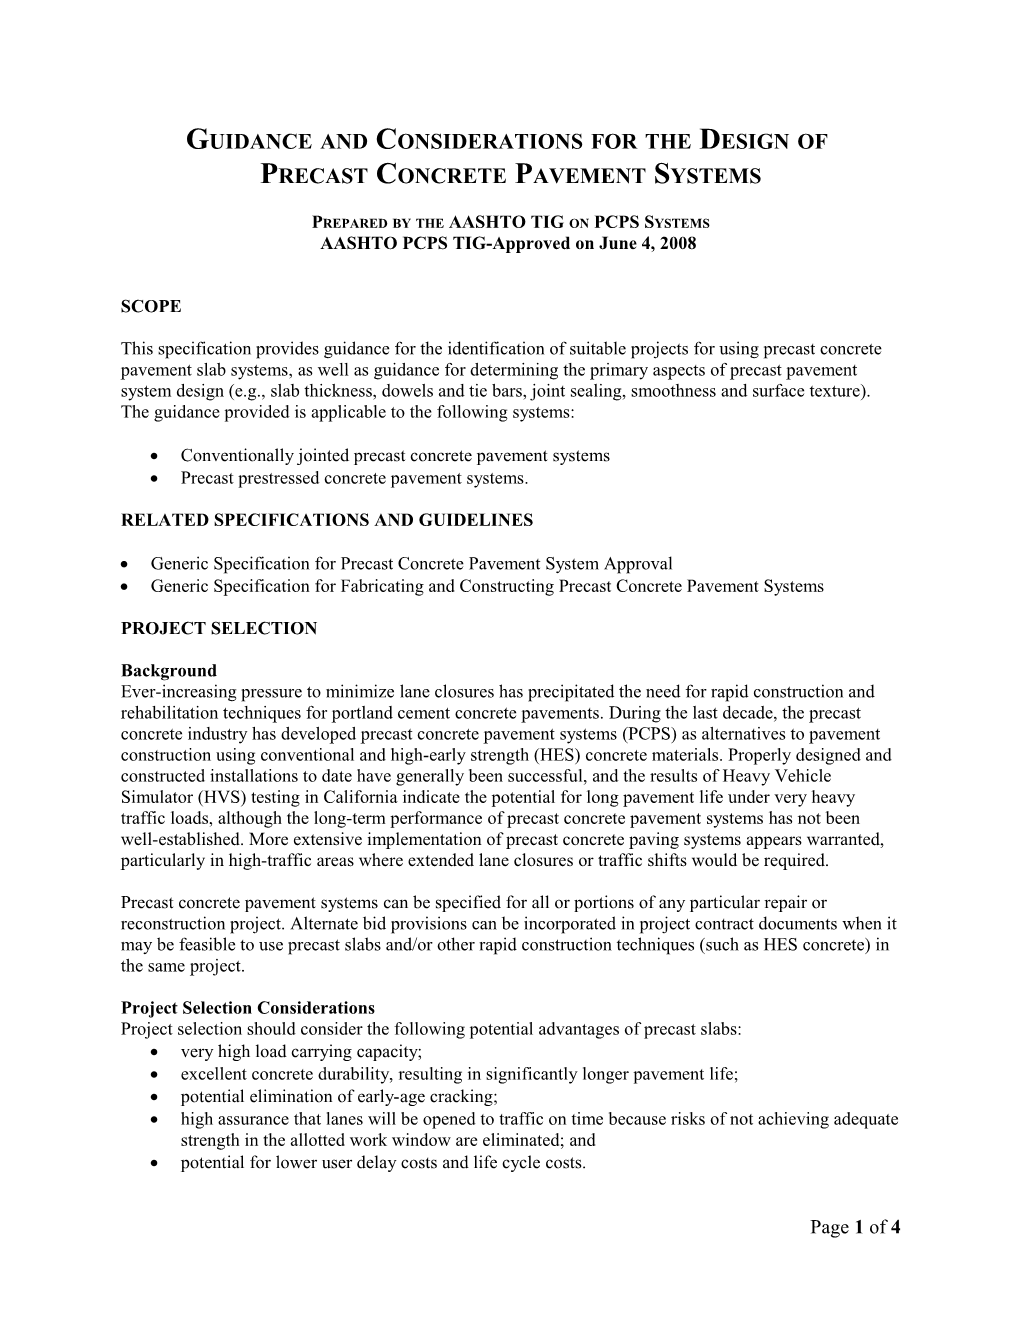 AASHTO TIG Draft PCPS Design Guidelines